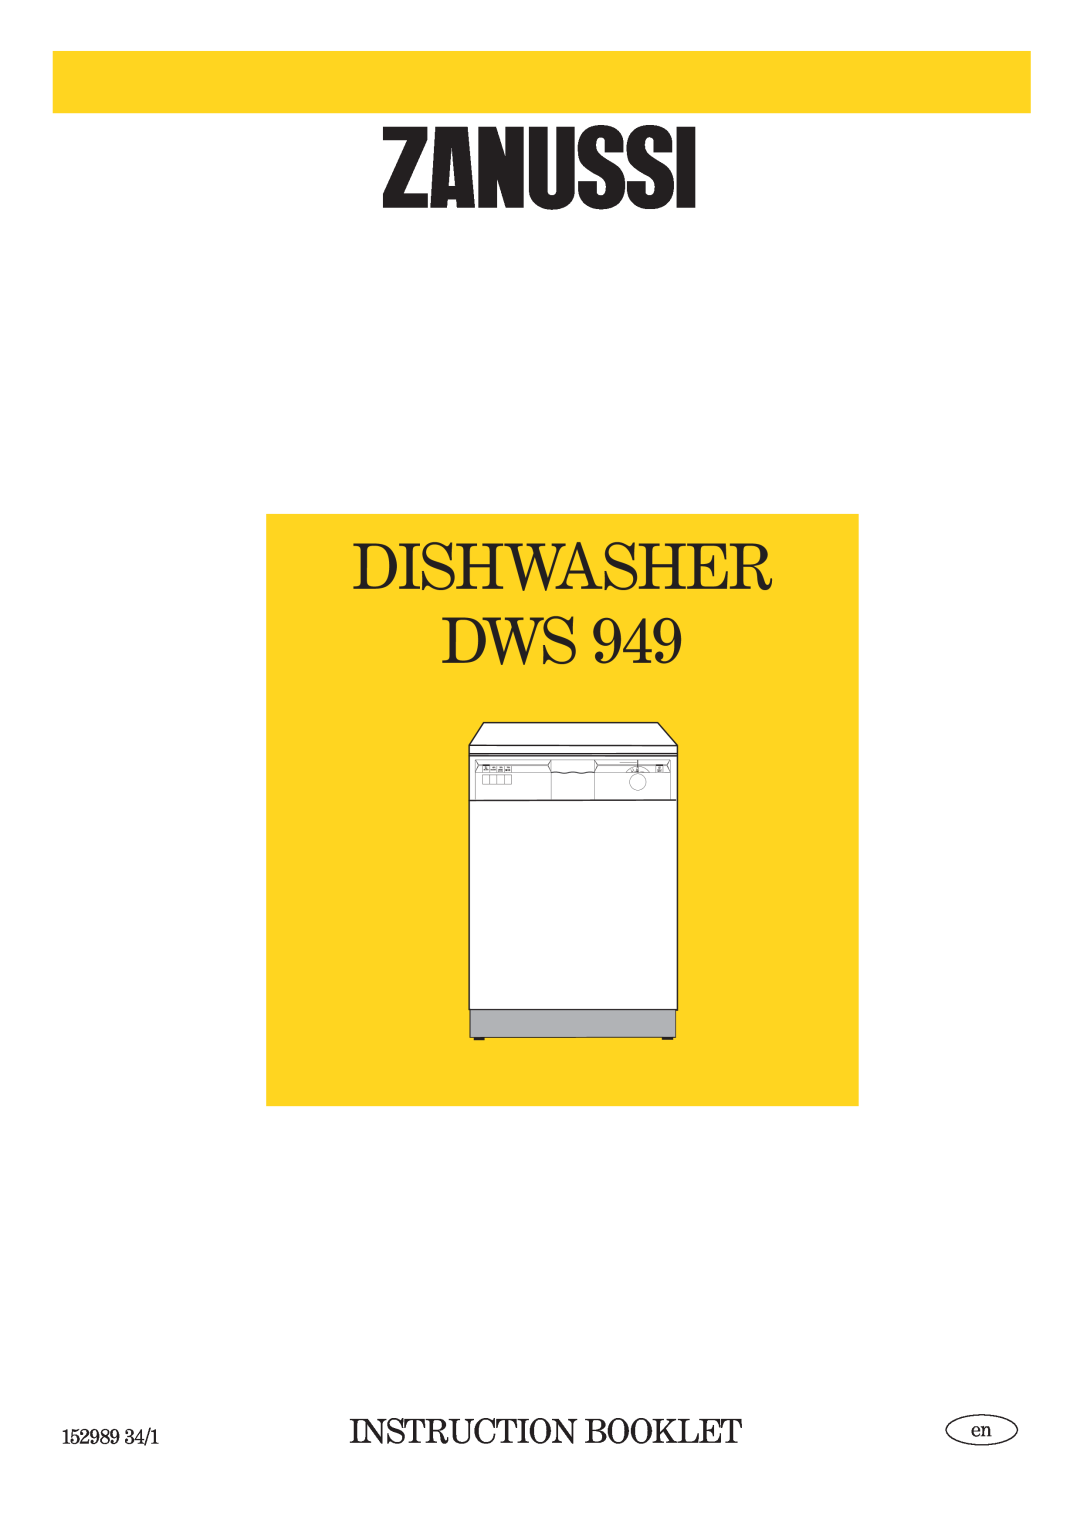 Zanussi DWS 949 manual Dishwasher Dws, Instruction Booklet, 152989 34/1 